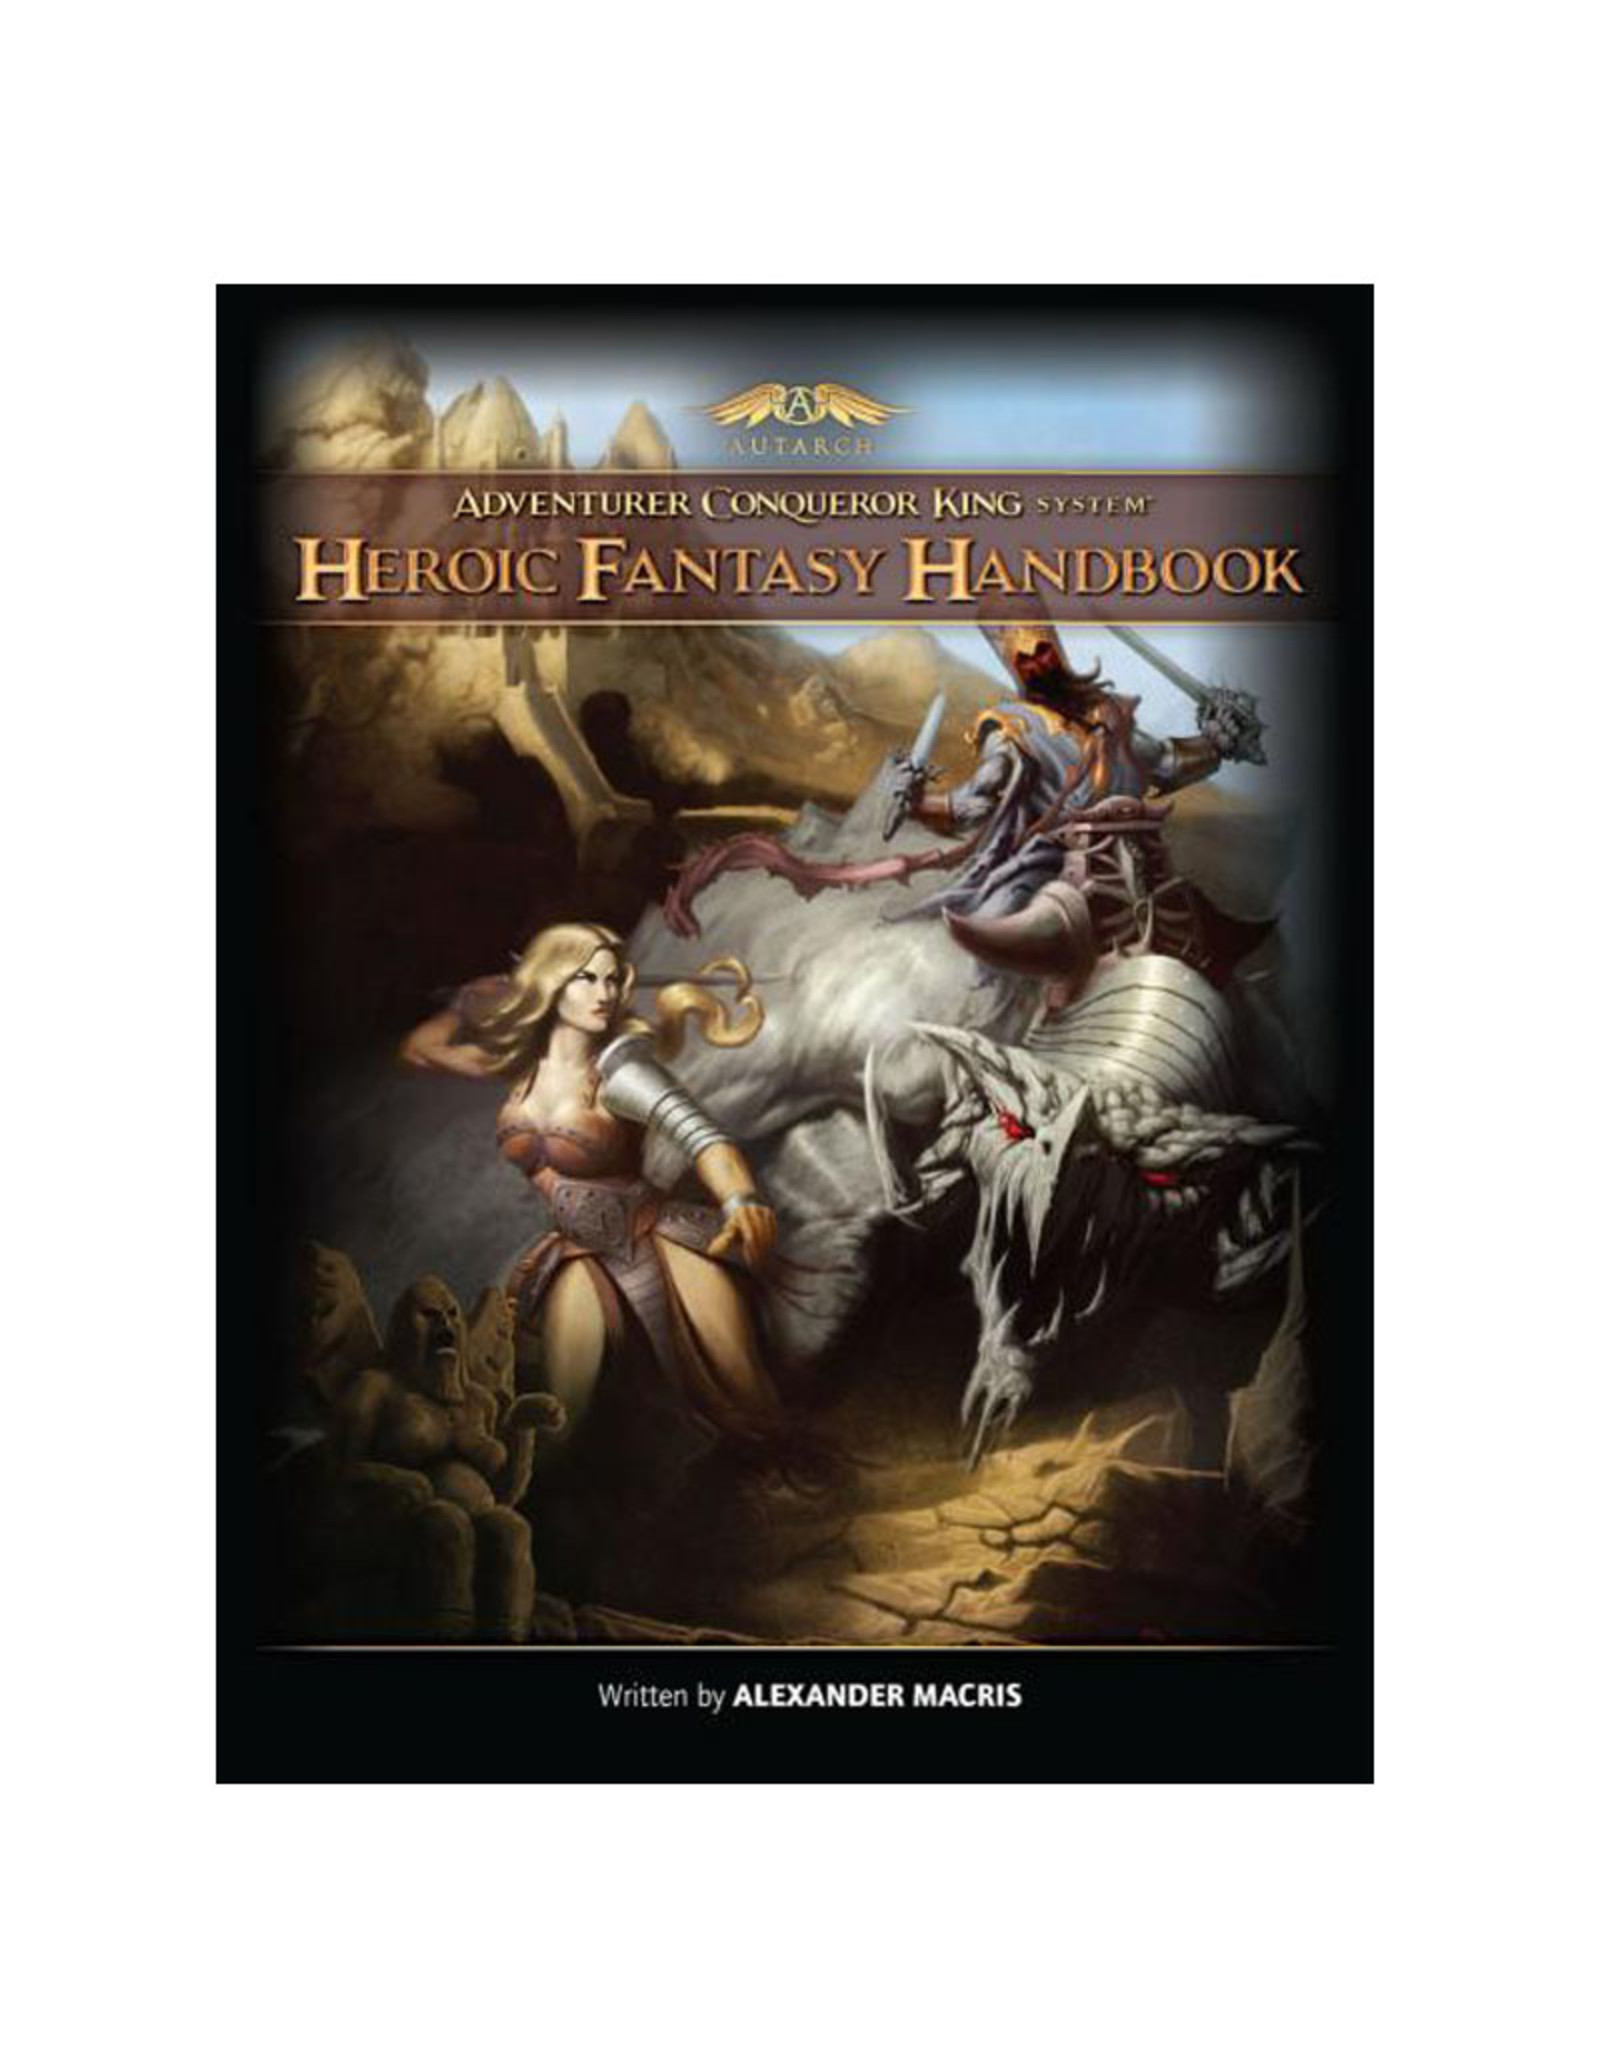 Autarch Heroic Fantasy Handbook